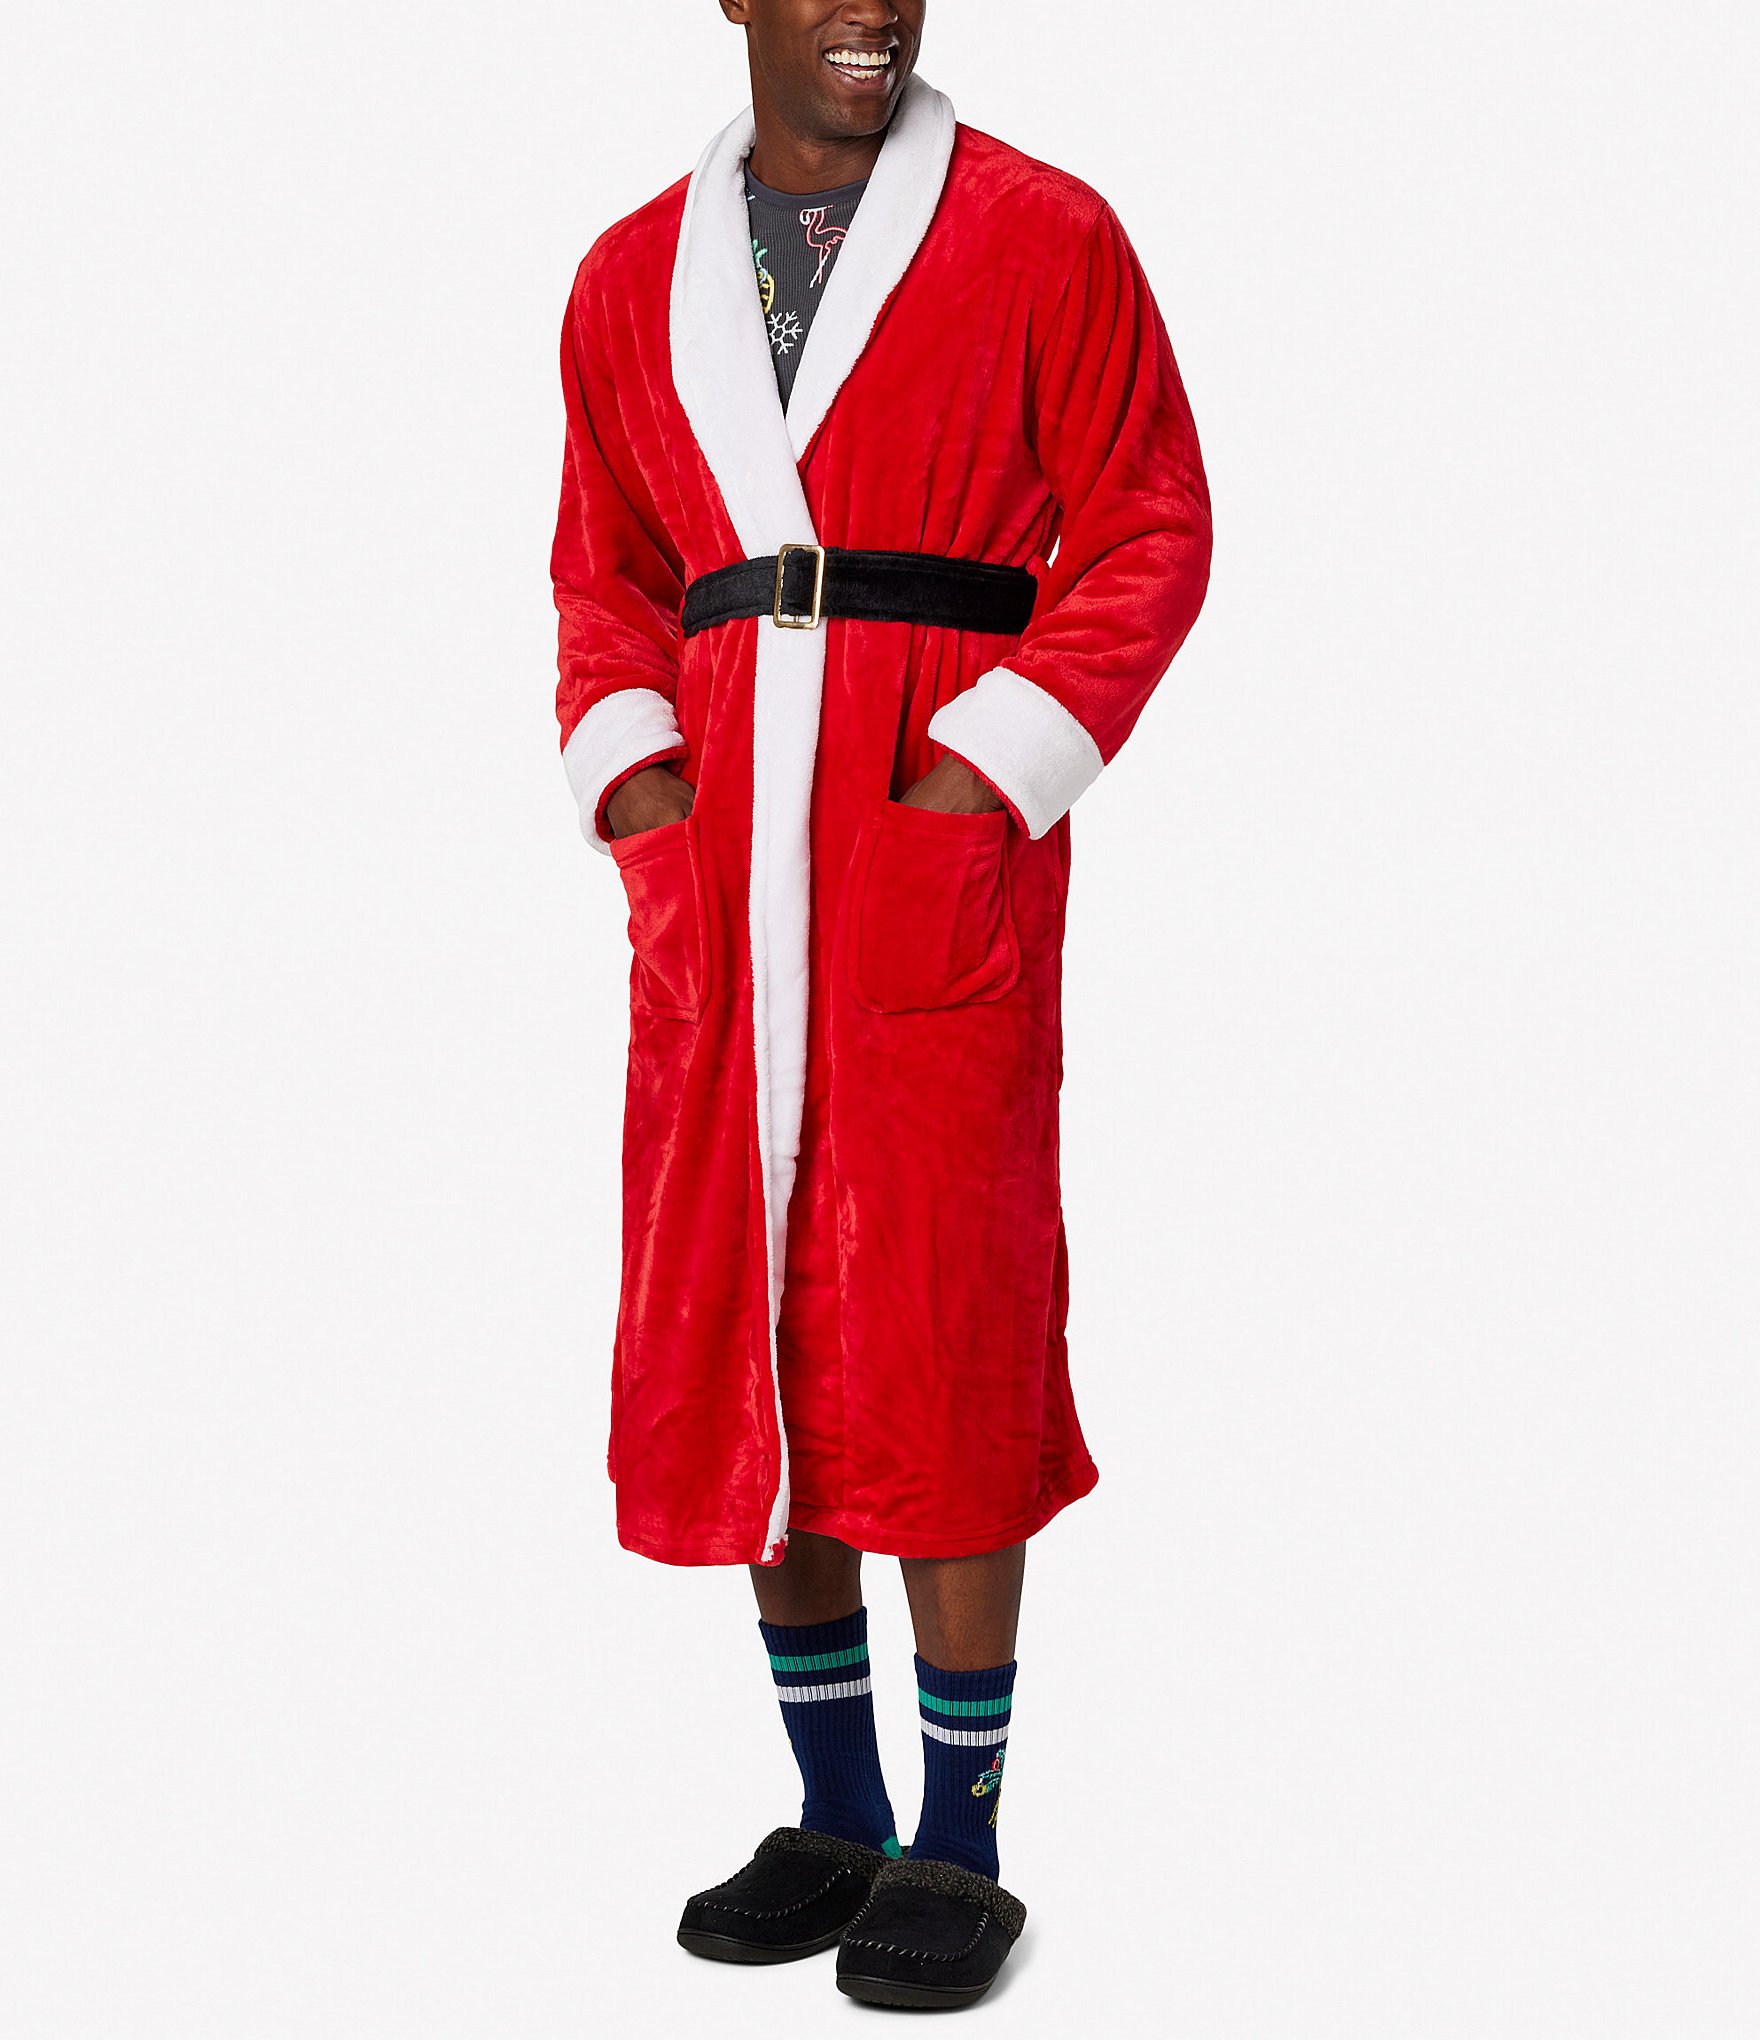 DAYU Men's Fleece Hooded Short Bath Robes Christmas Santa Robe Flannel  Pajamas Sleepwear Nightwear, Red, XXL : Amazon.in: Home & Kitchen